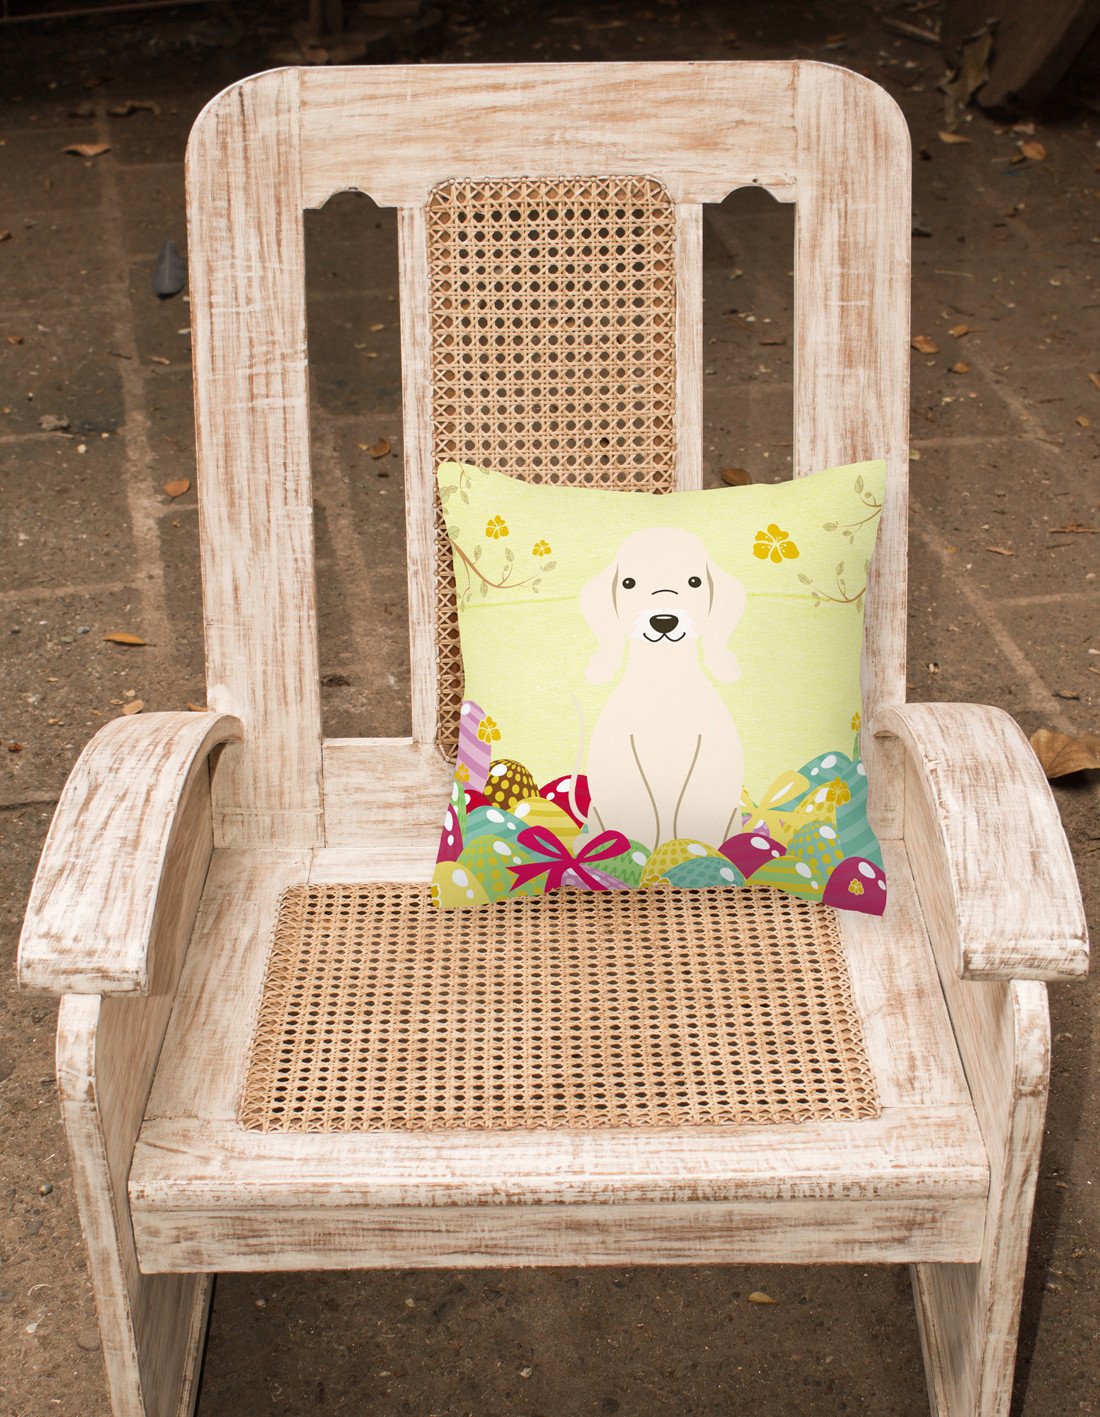 Easter Eggs Bedlington Terrier Sandy Fabric Decorative Pillow BB6091PW1818 by Caroline's Treasures